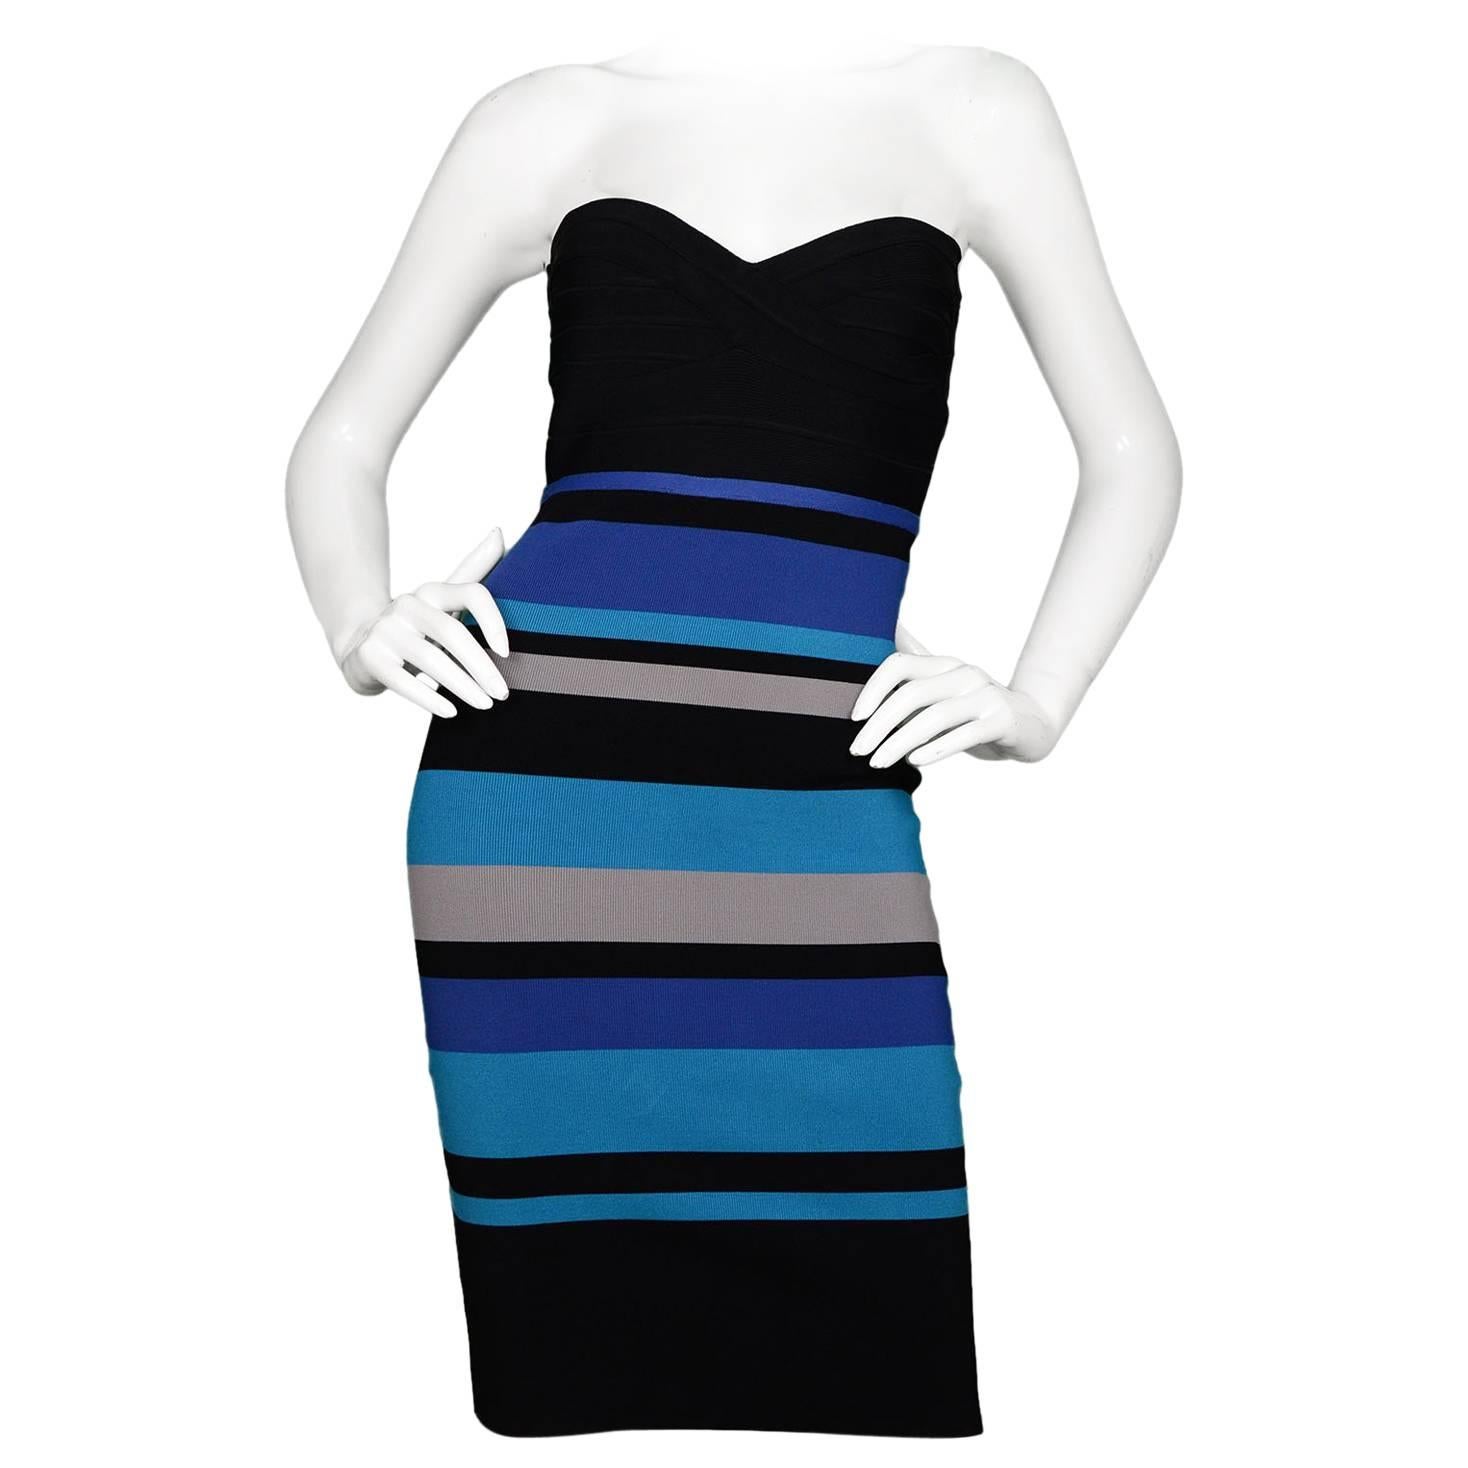 Herve Leger Black & Blue Stripe Strapless Bandage Dress sz M